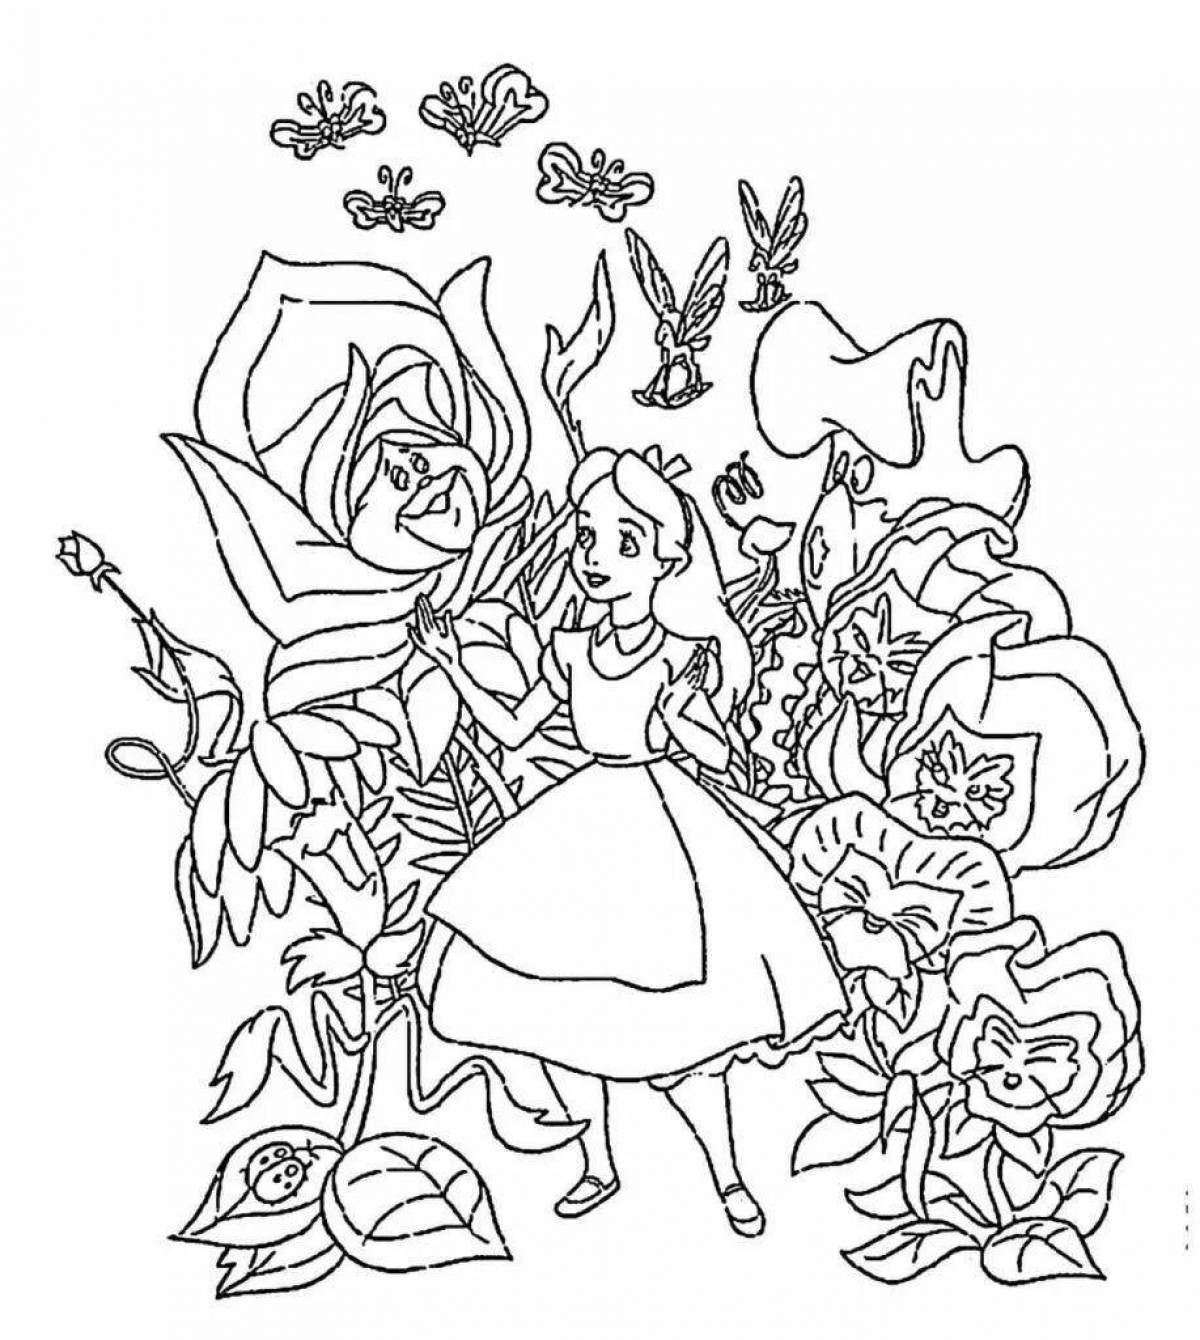 Alice in Wonderland #1